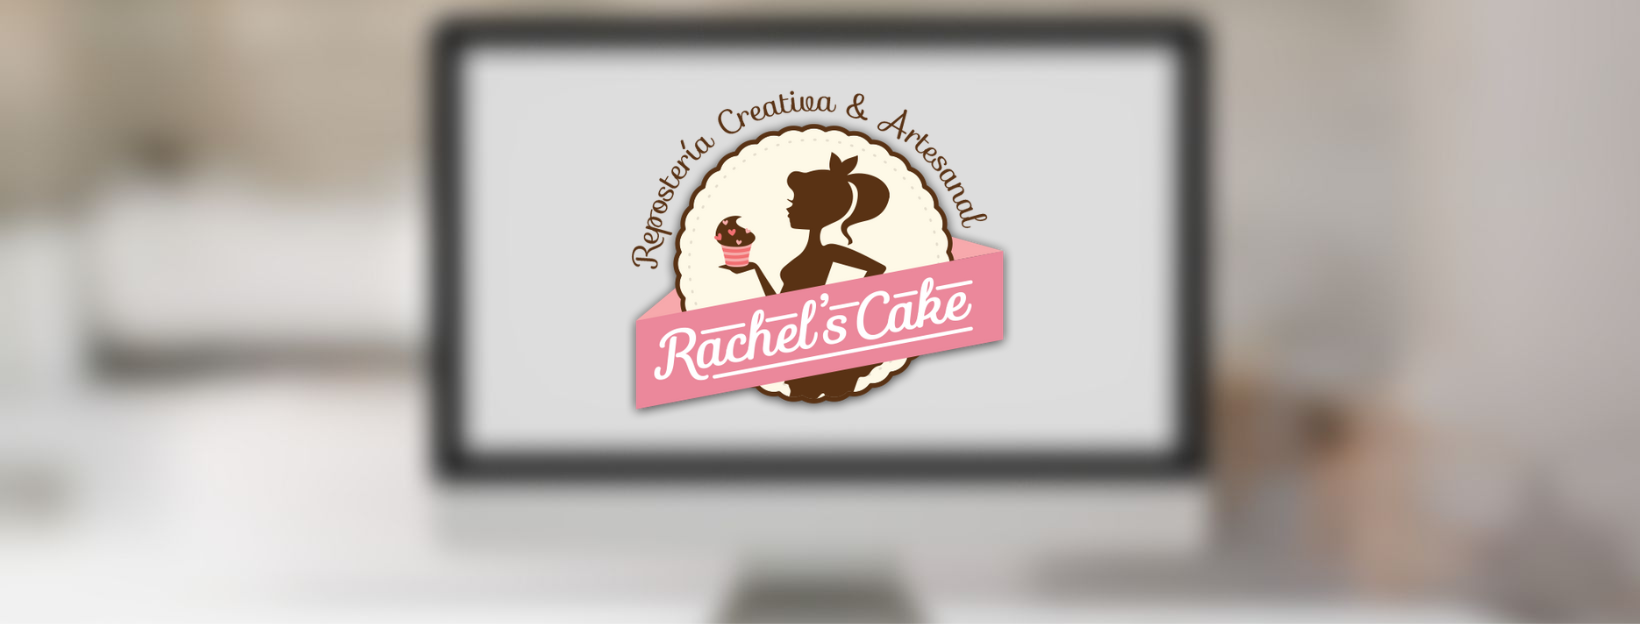 SEO per la botiga online de Rachel’s Cake